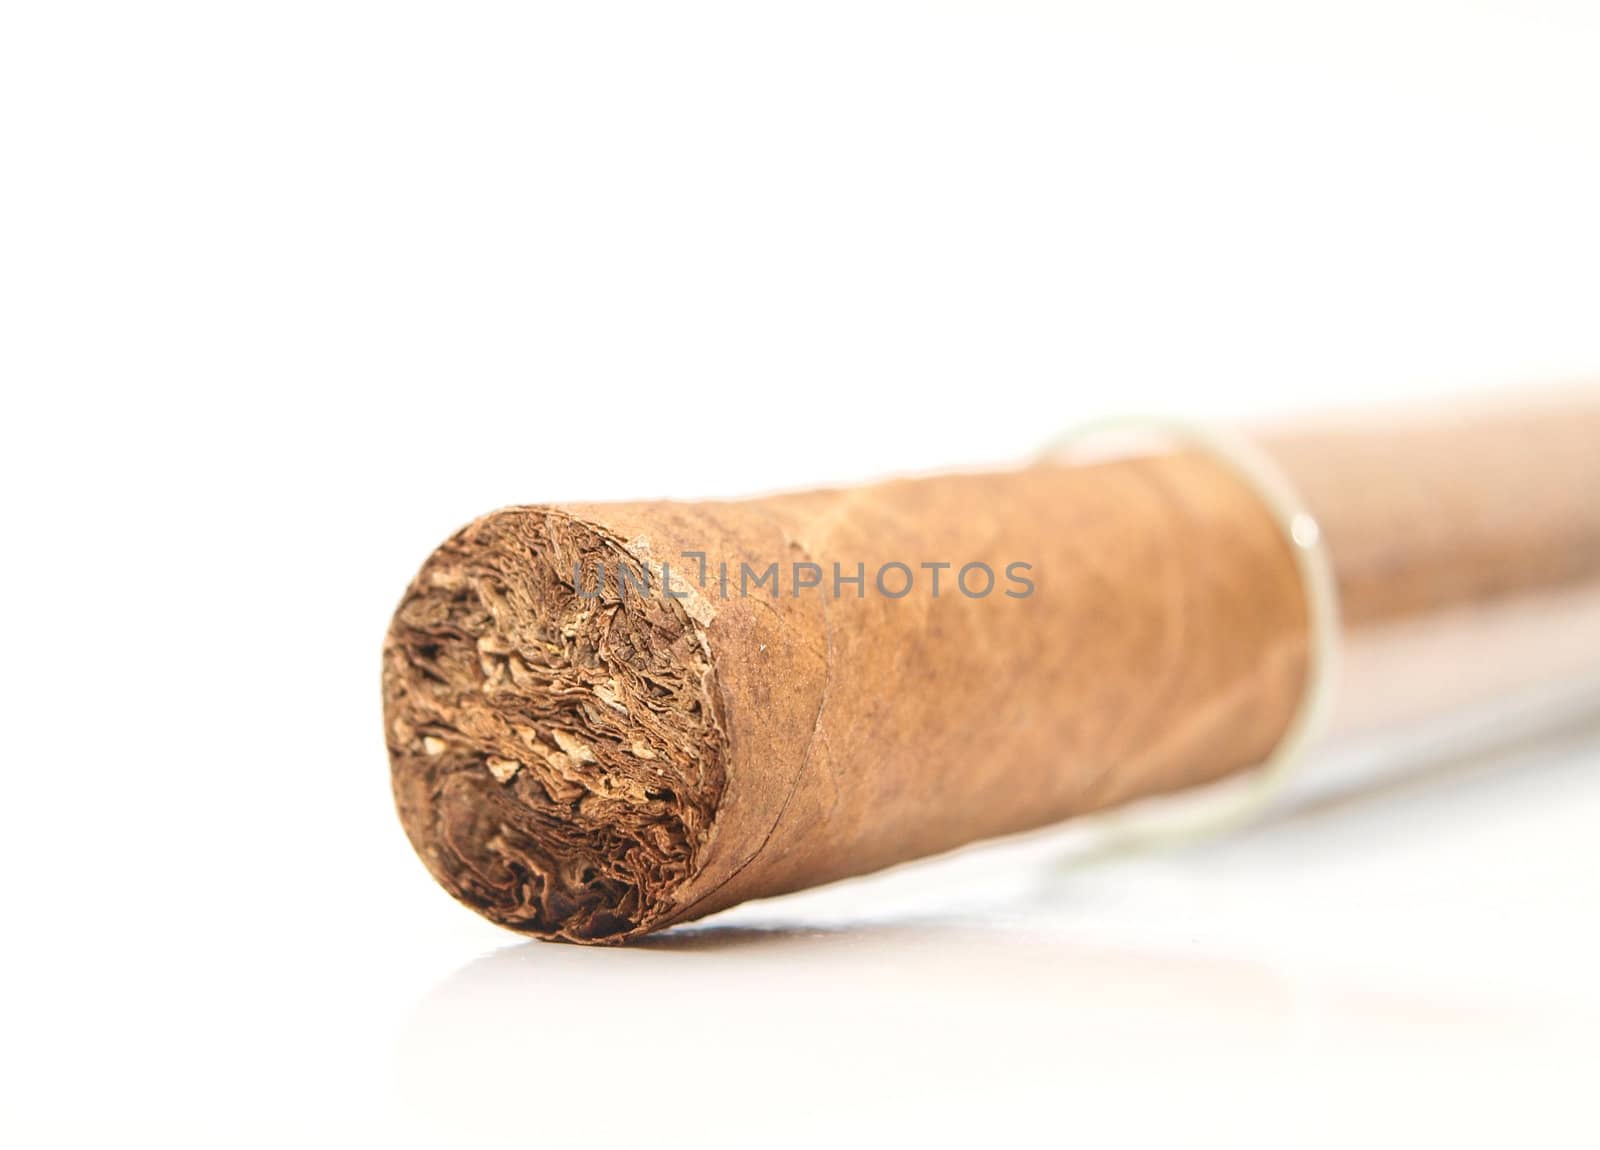 Cigars in glass capsule by Arvebettum